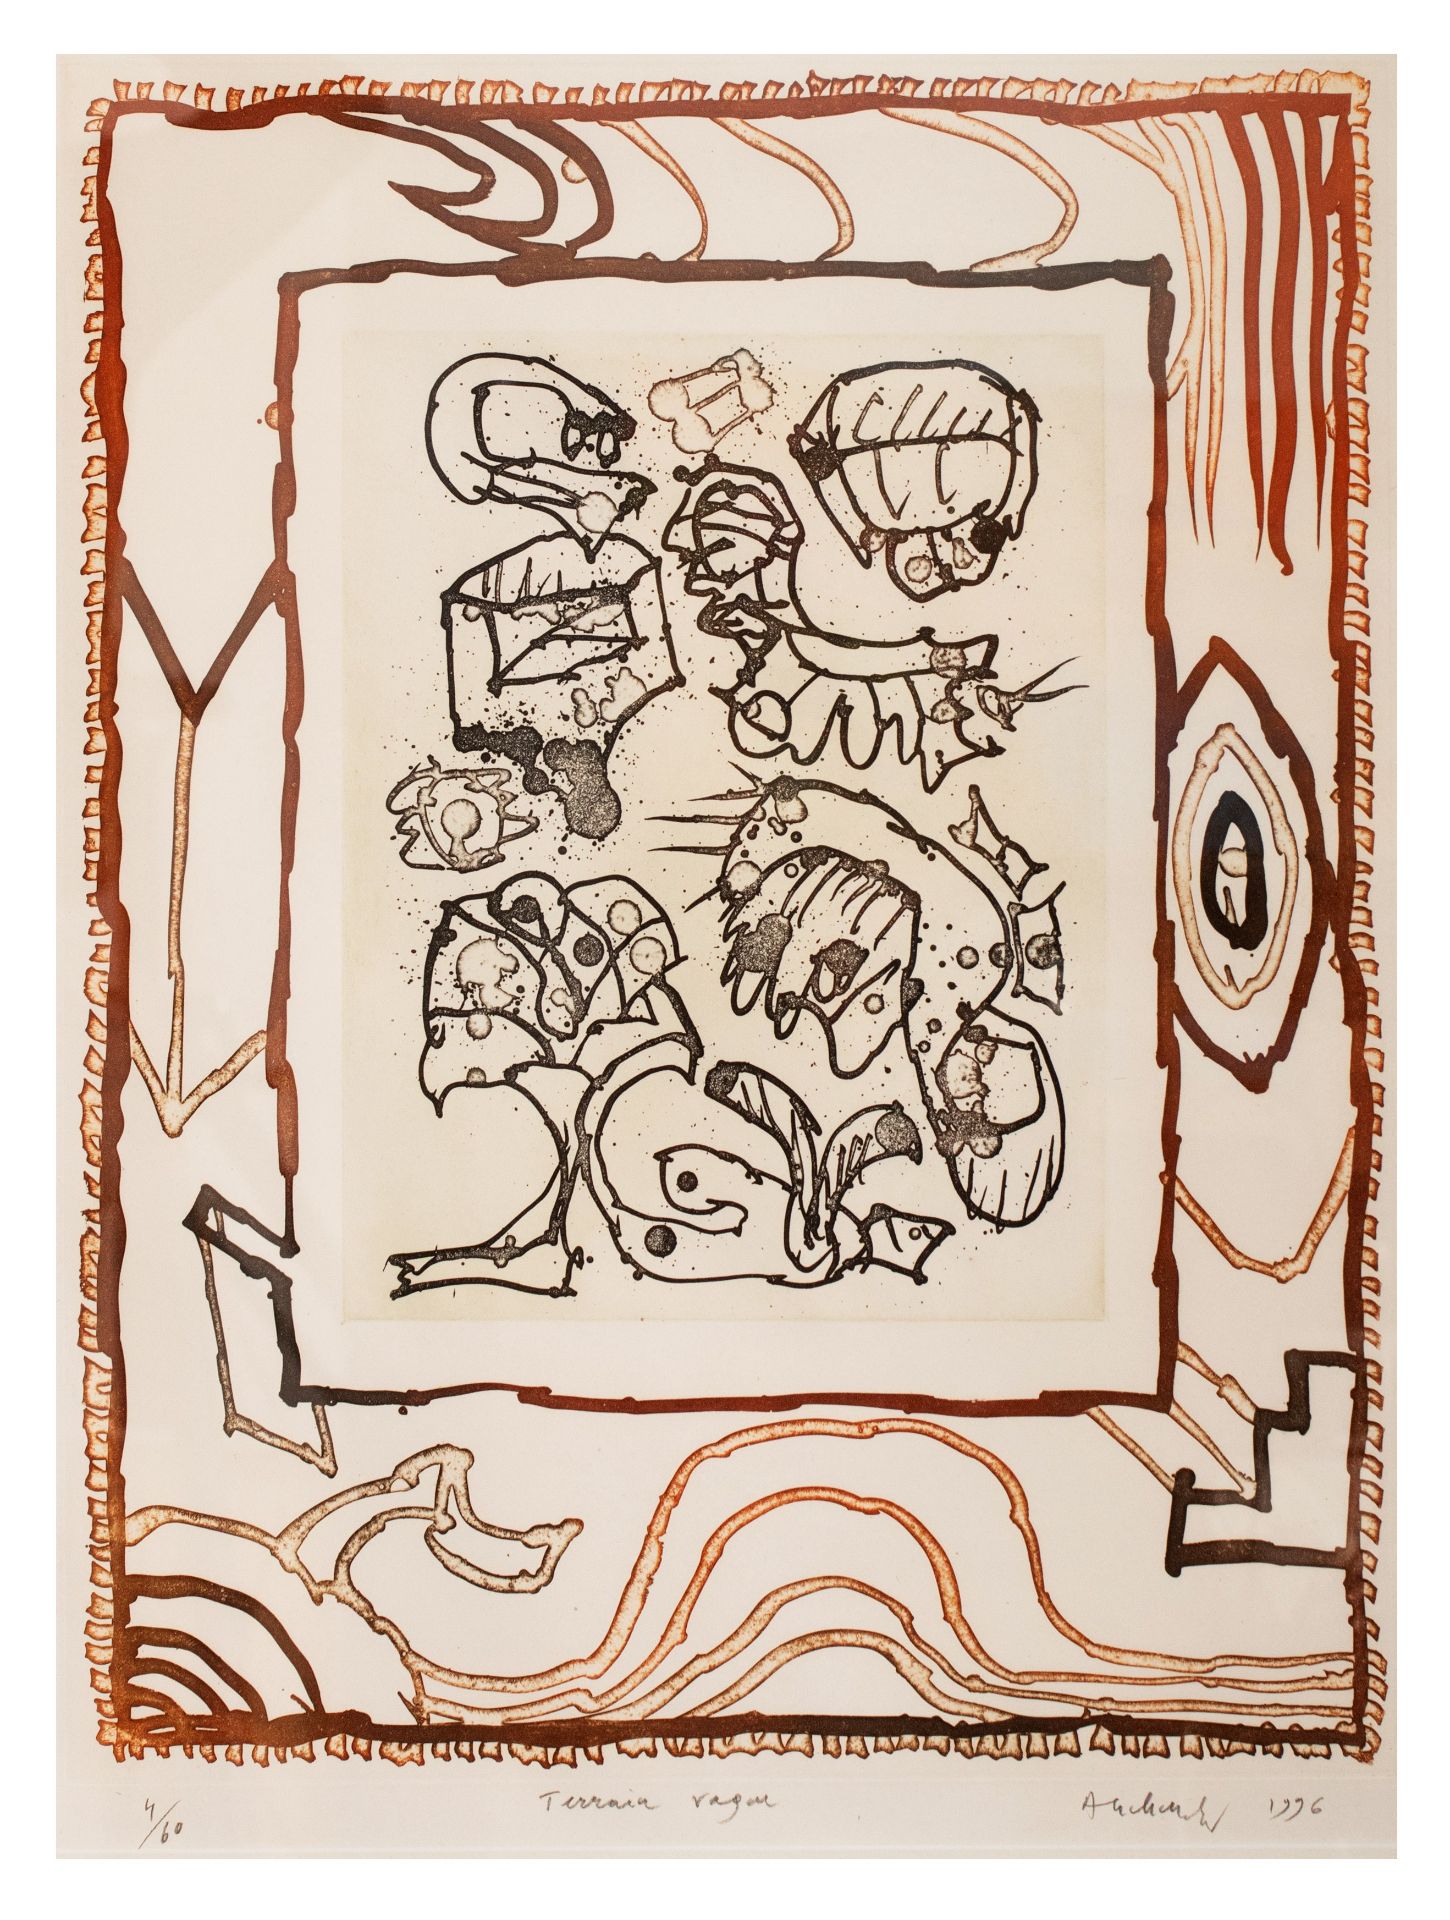 Pierre Alechinsky (1927), 'Terrain Vague', 1996, aquatint, N° 4/60, 53 x 68 cm